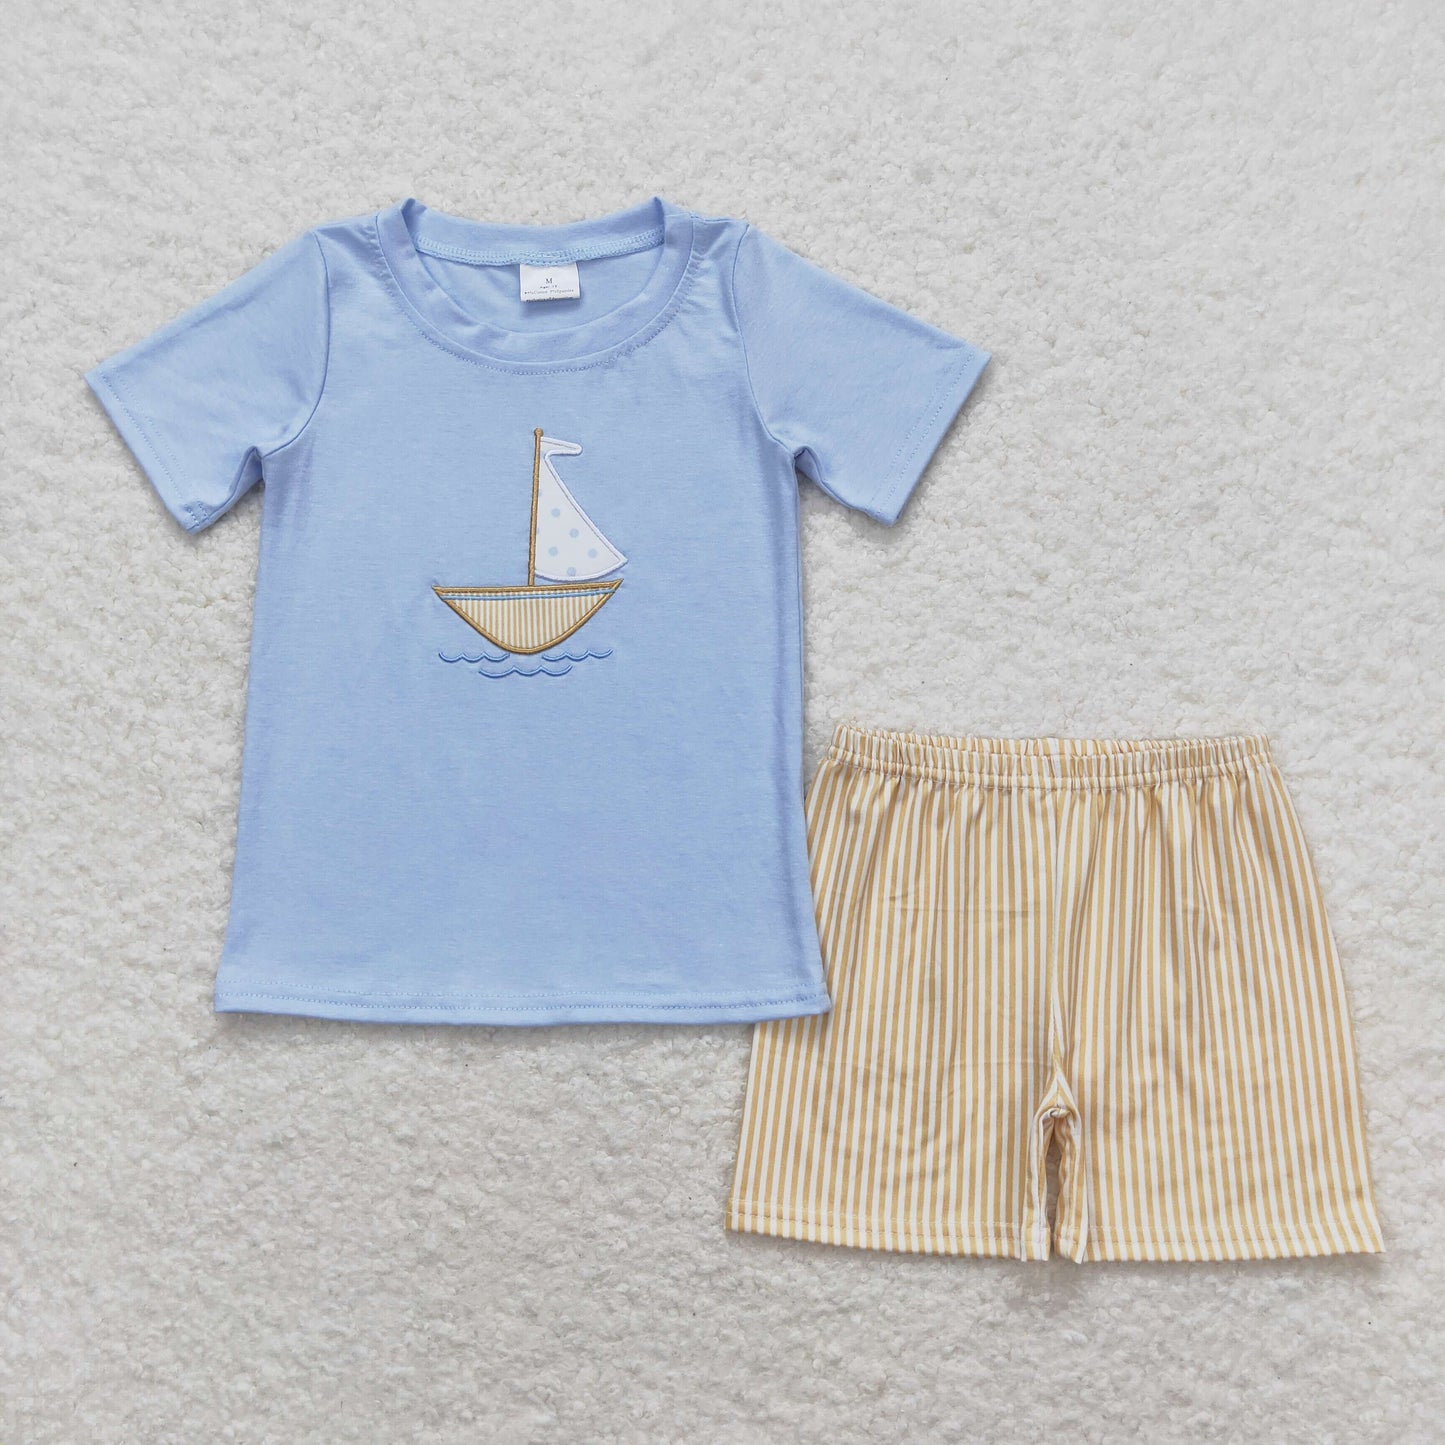 embroidery sailboat shorts set baby boy clothes